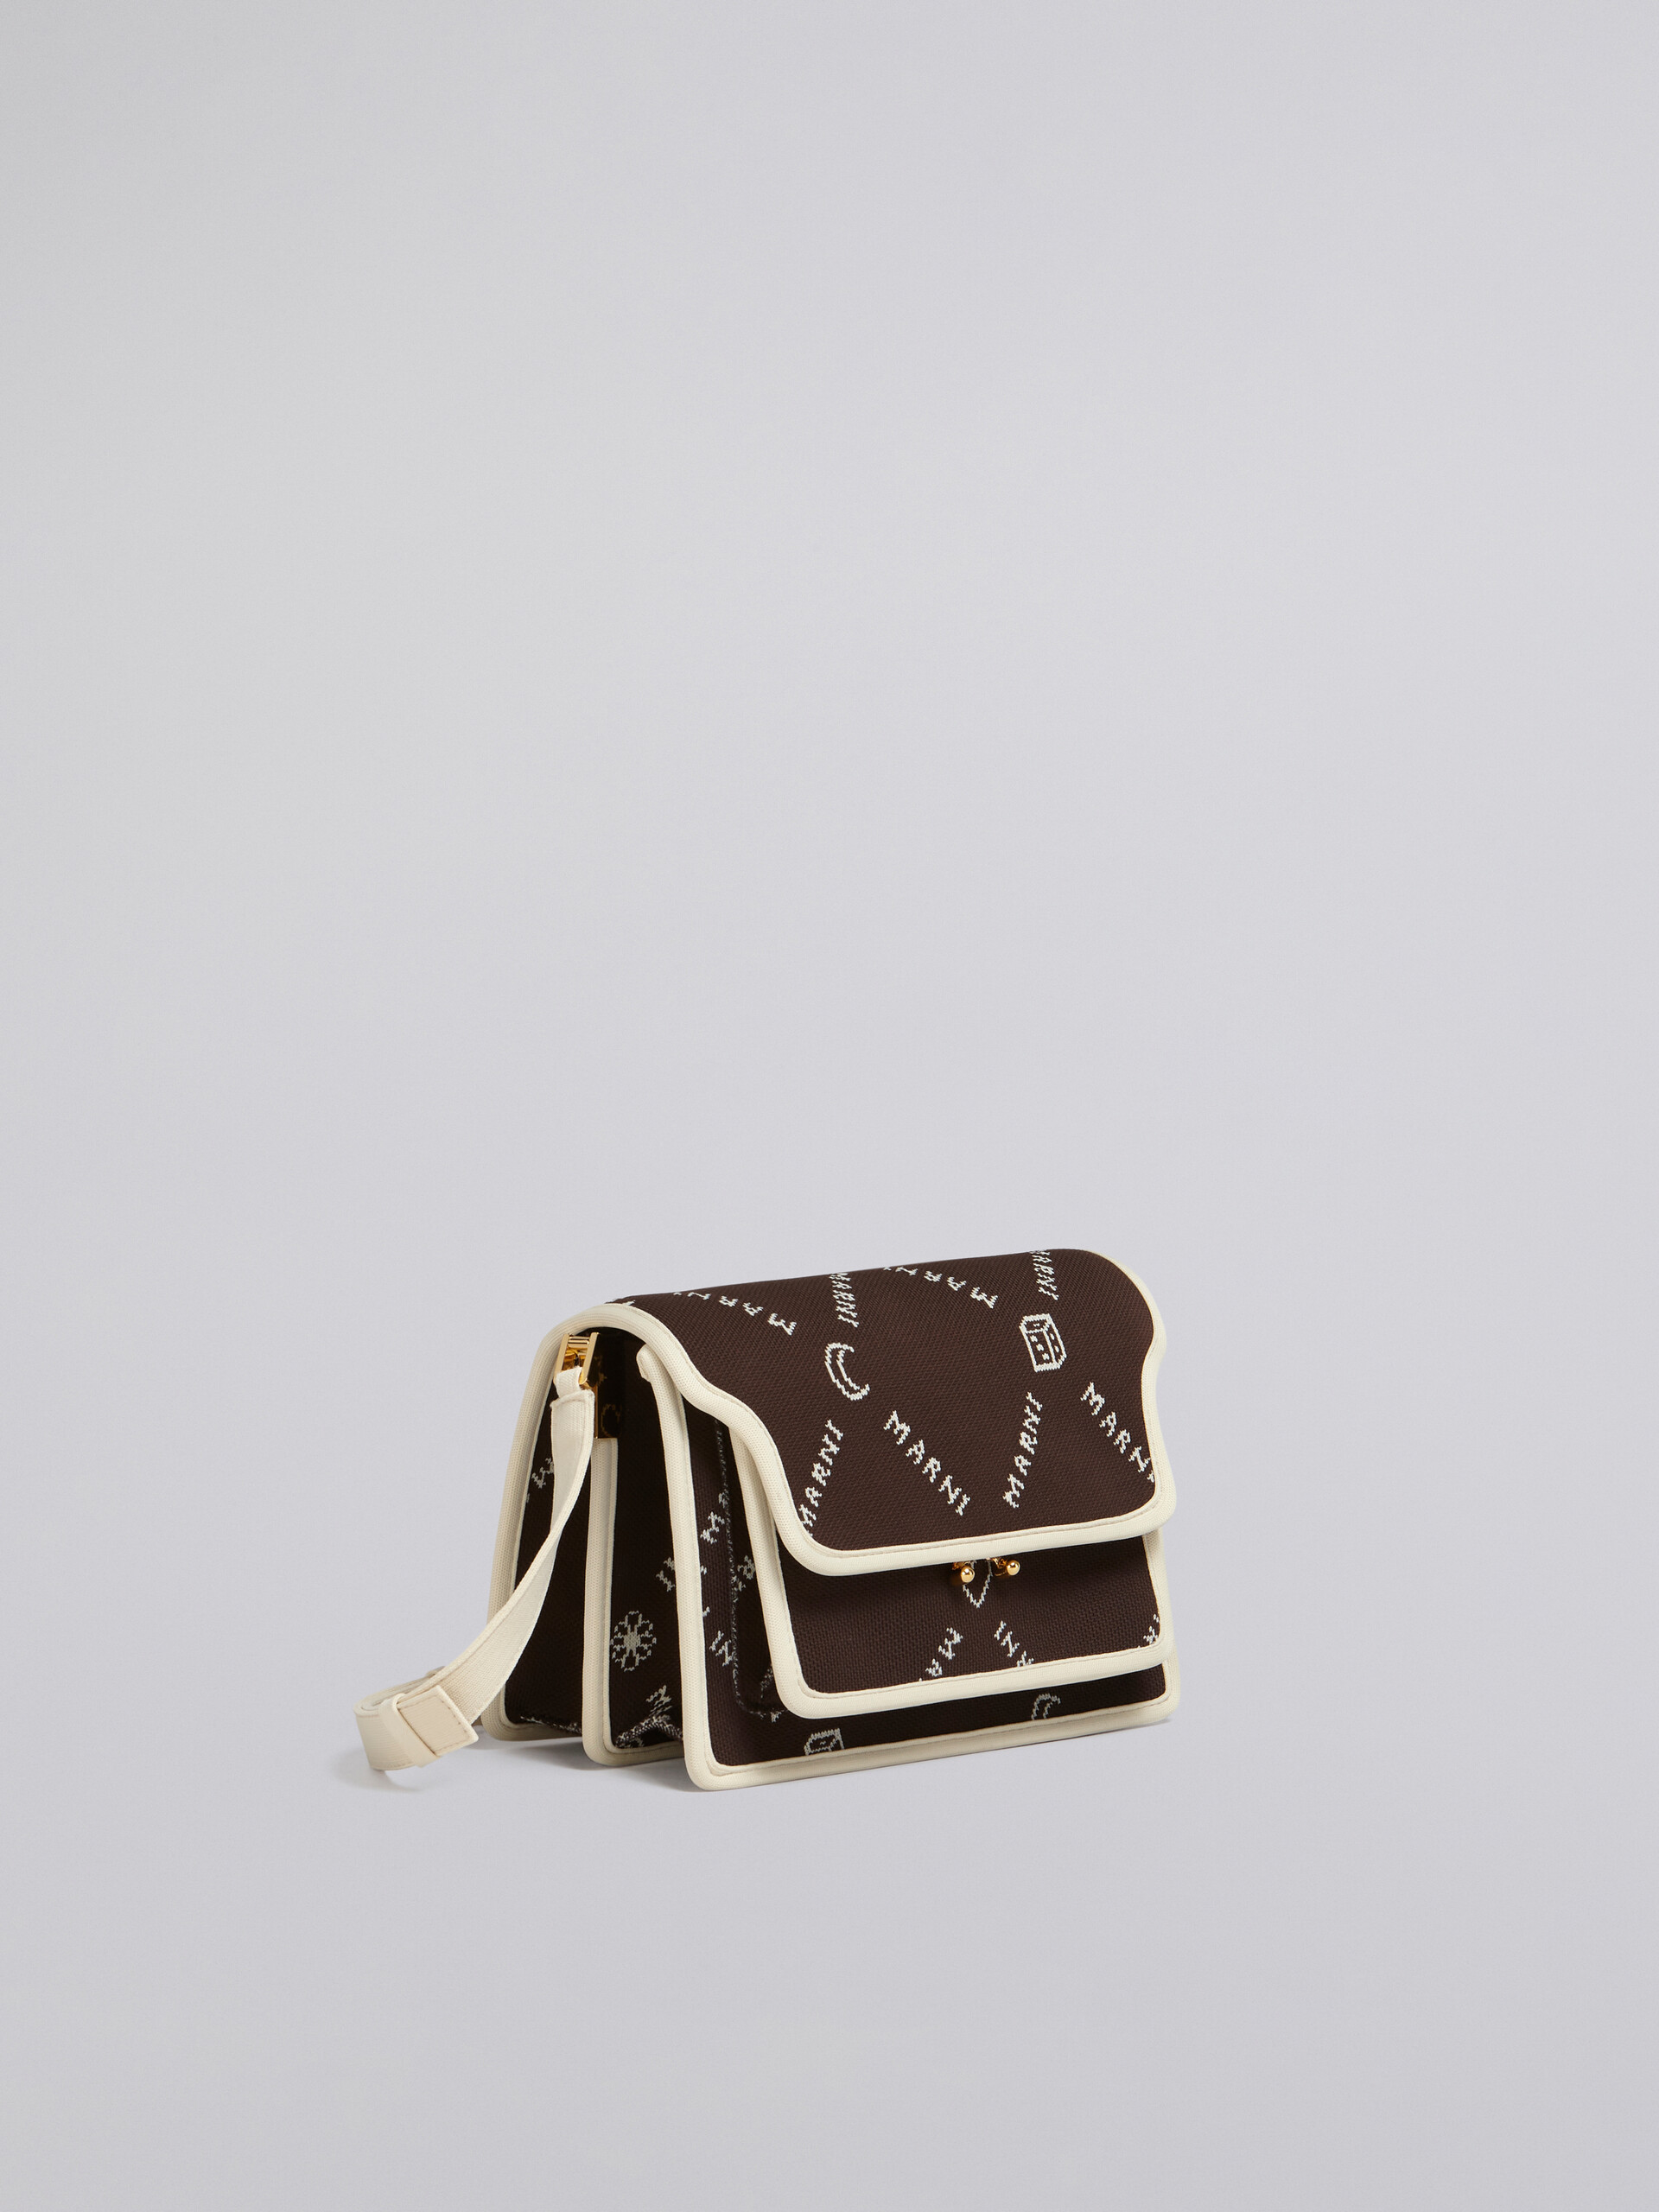 TRUNK SOFT medium bag in brown Marnigram jacquard - Shoulder Bag - Image 6